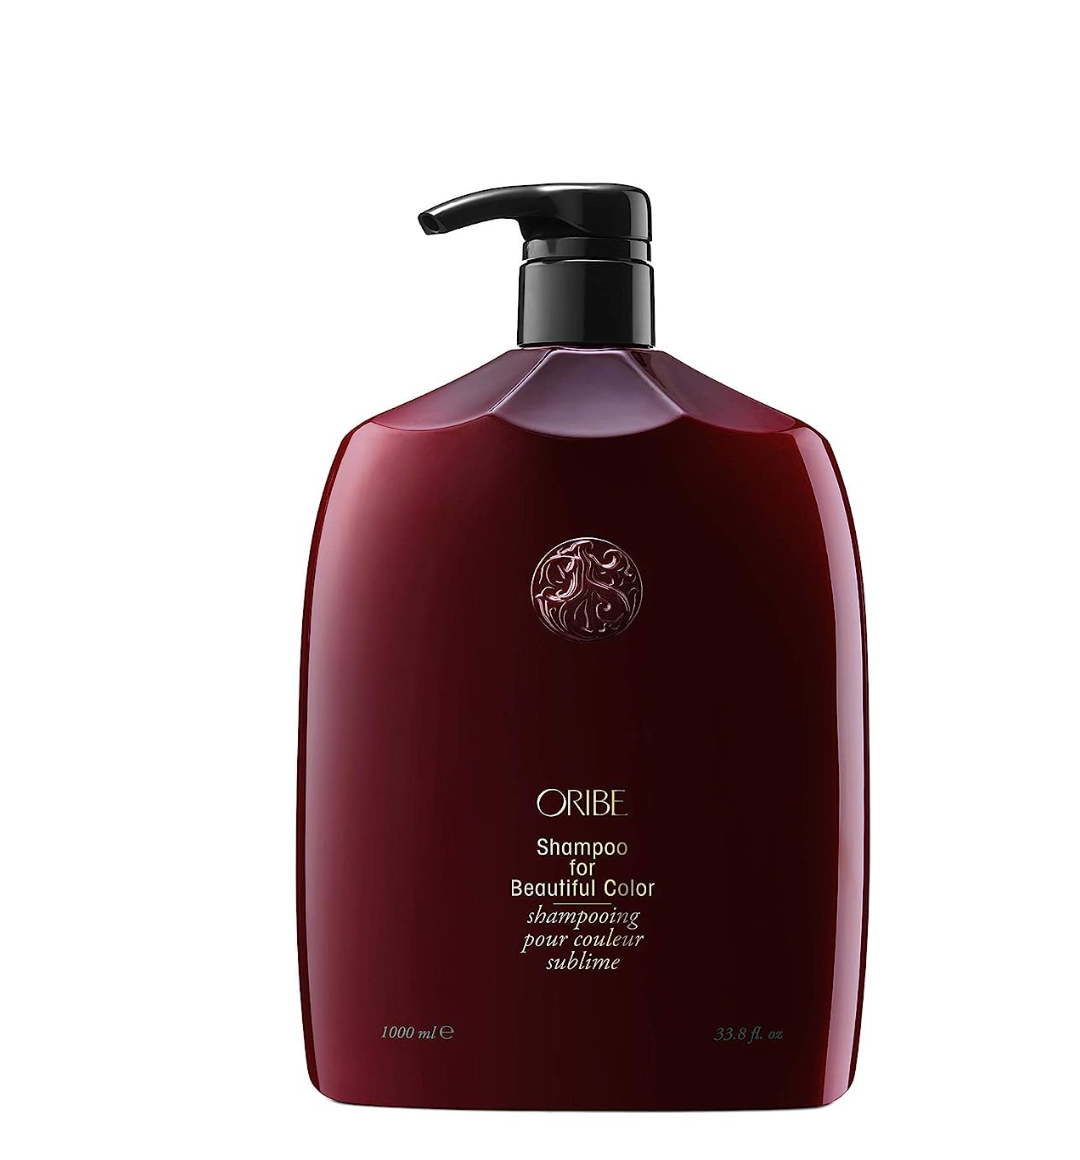 Oribe Shampoo for Beautiful Color Bottle 33.8fl